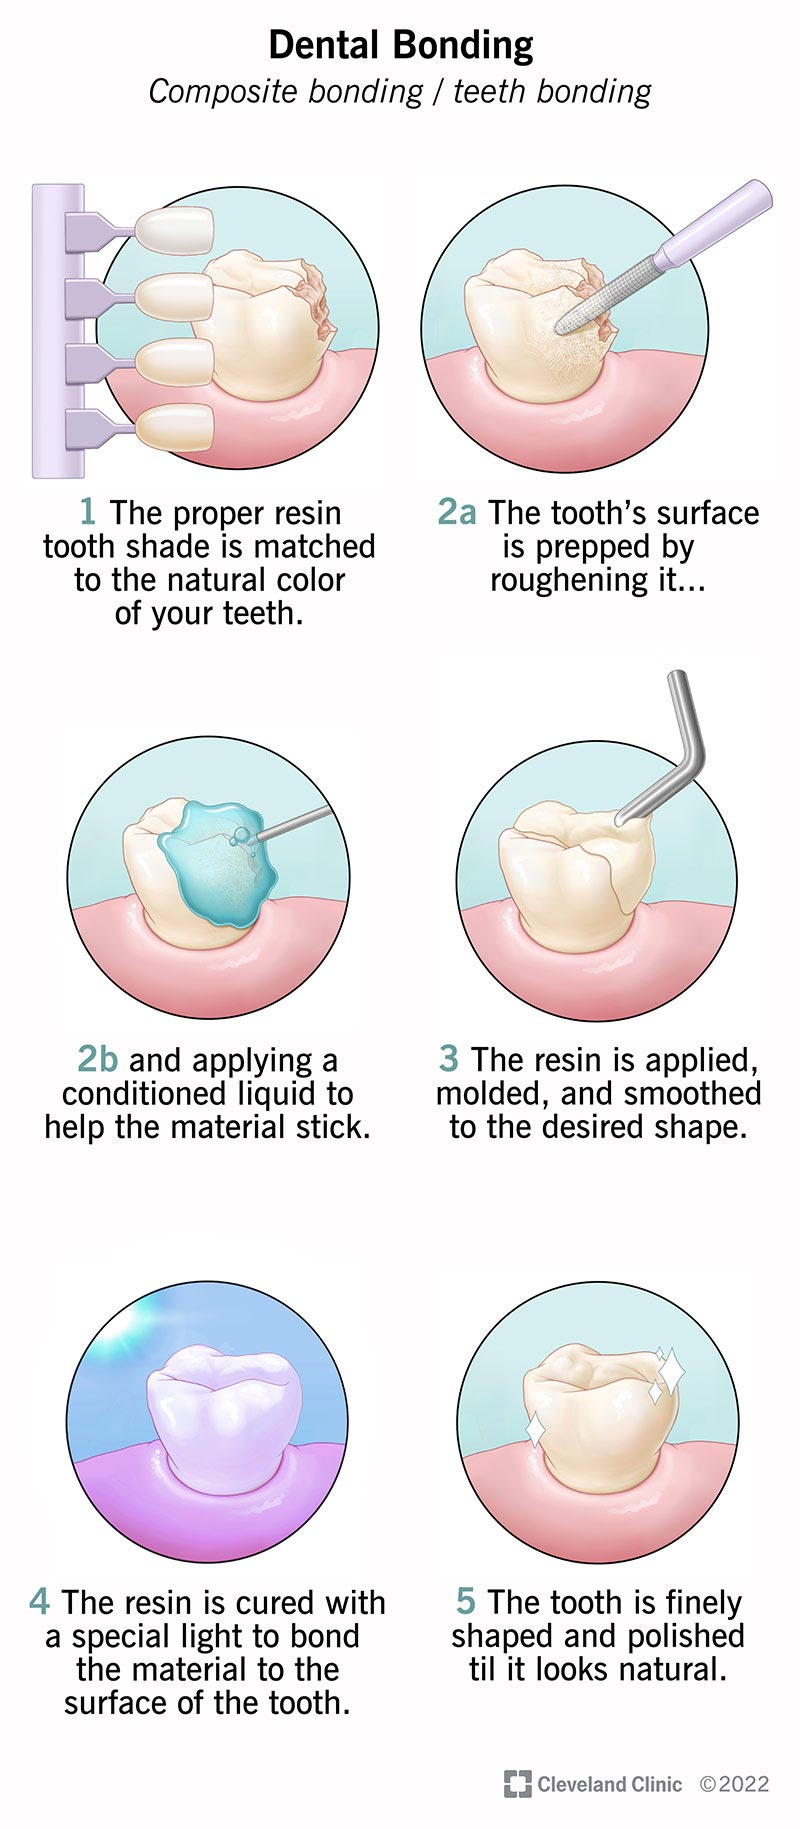 How Long Does Dental Bonding Take to Set?